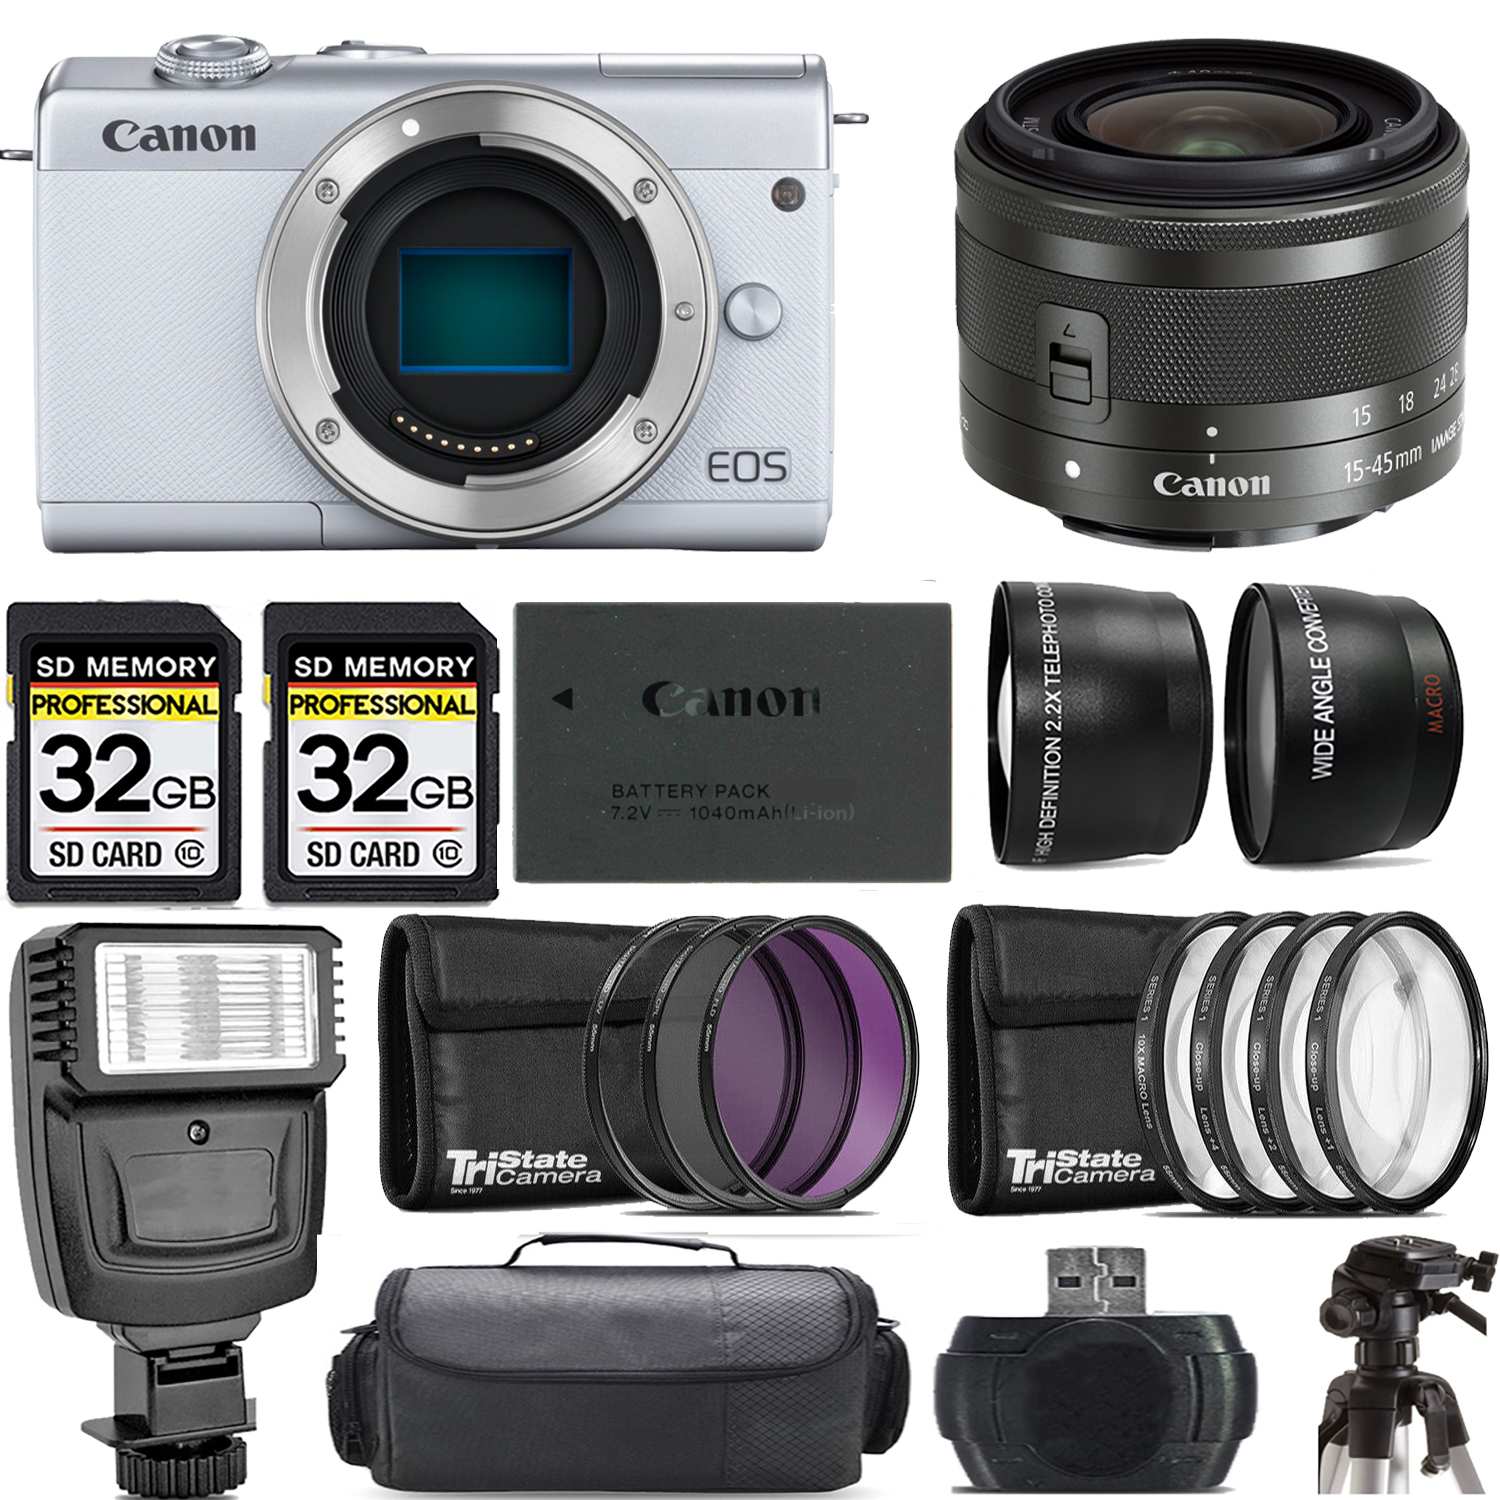 EOS M200  Camera (White) + 15-45mm IS STM Lens (Graphite) + Flash - Kit *FREE SHIPPING*